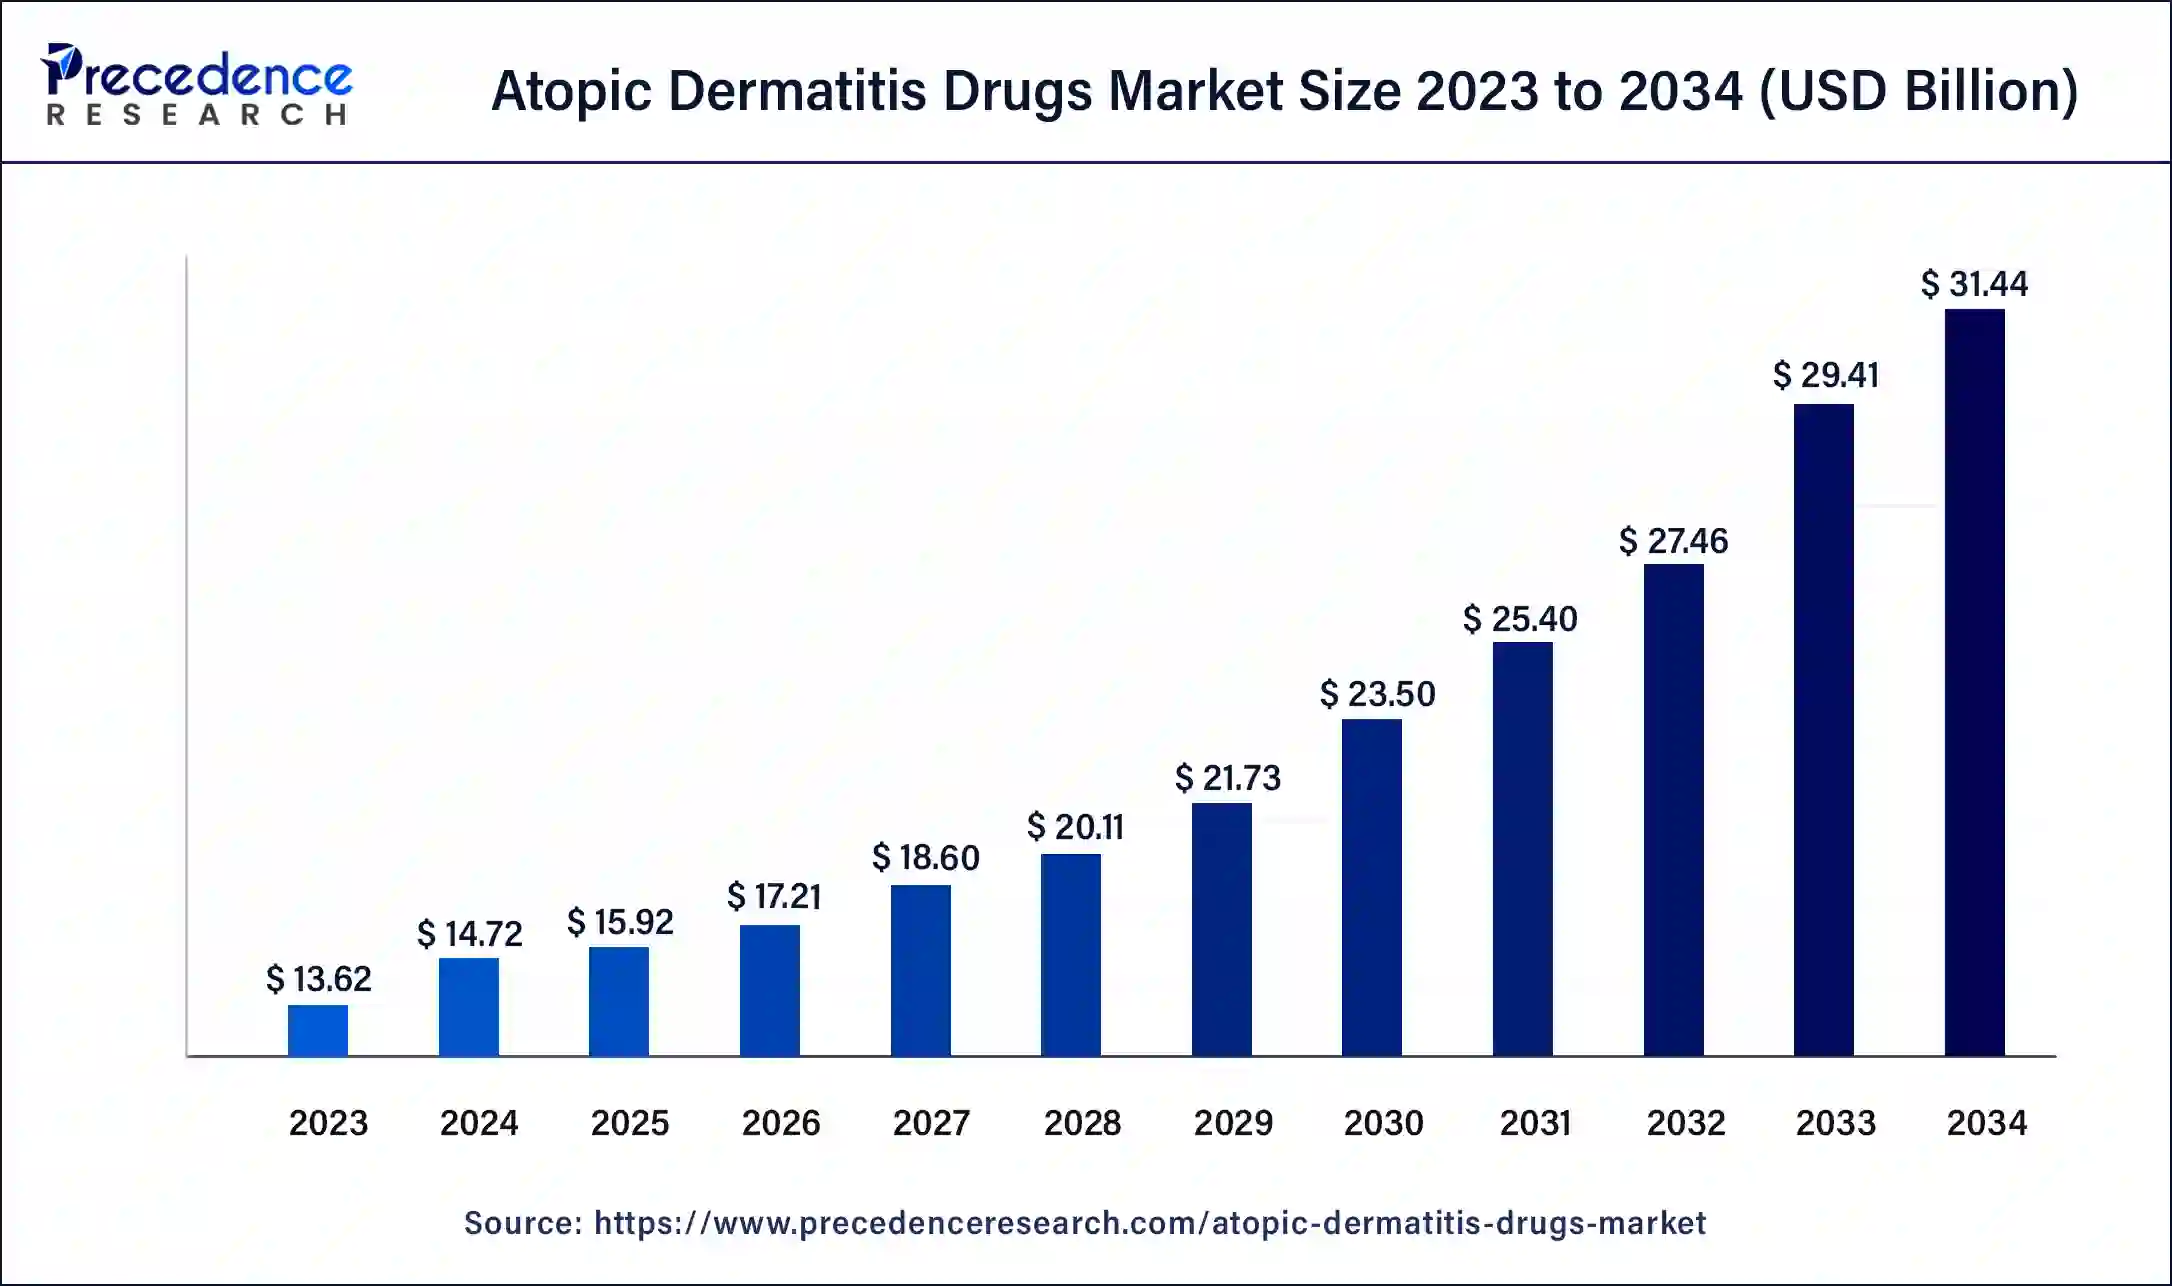 Atopic Dermatitis Drugs Market Size 2024 To 2034